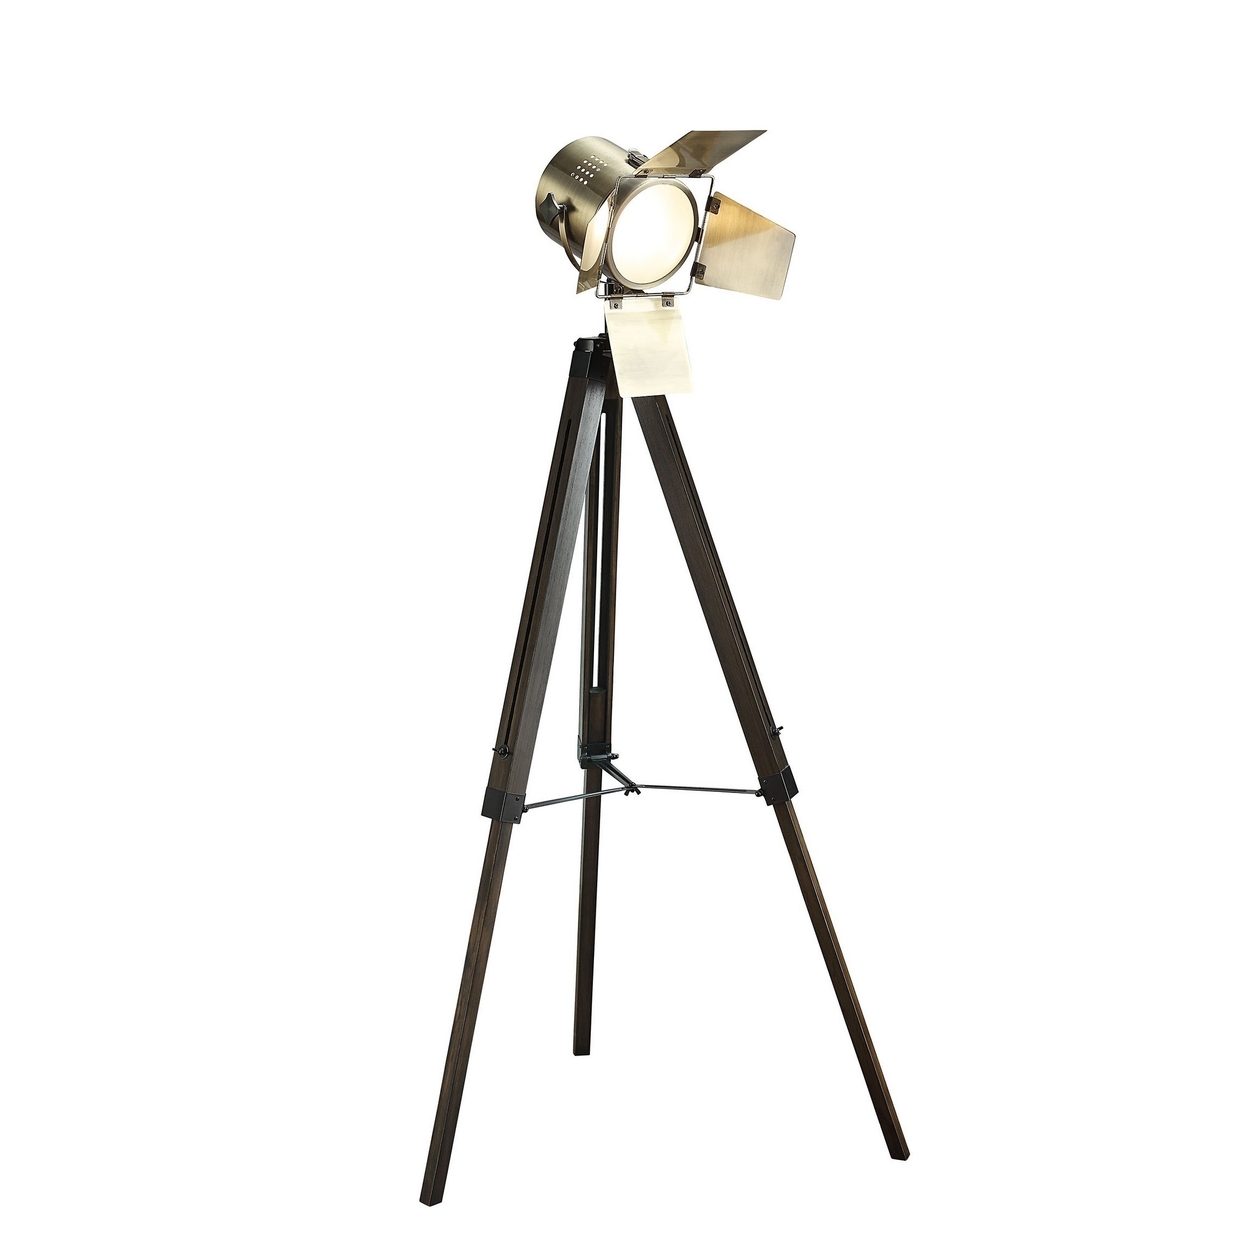 55 Inch Floor Lamp With Tripod Legs, Spotlight Design, Wood, Black Finish -Saltoro Sherpi